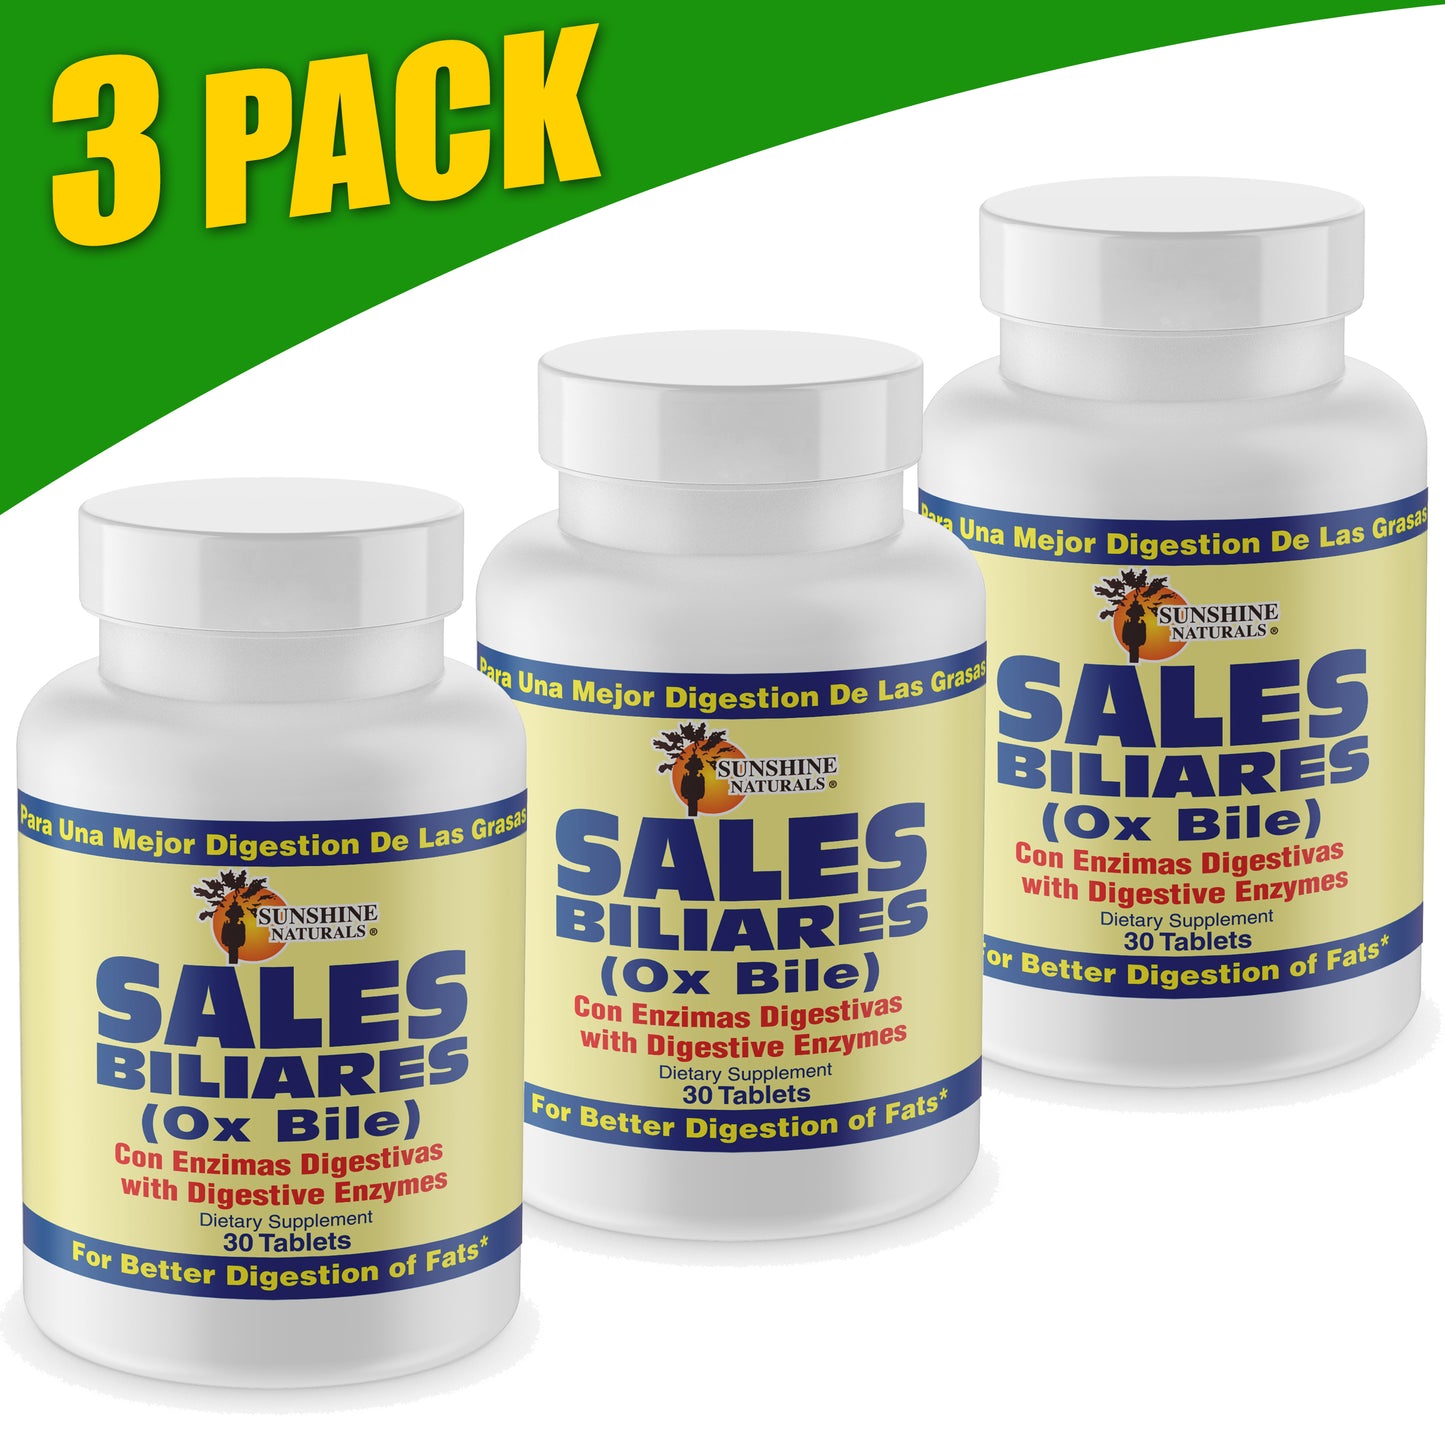 Sales Biliares (Ox Bile) plus Digestive Enzymes 30 Tablets